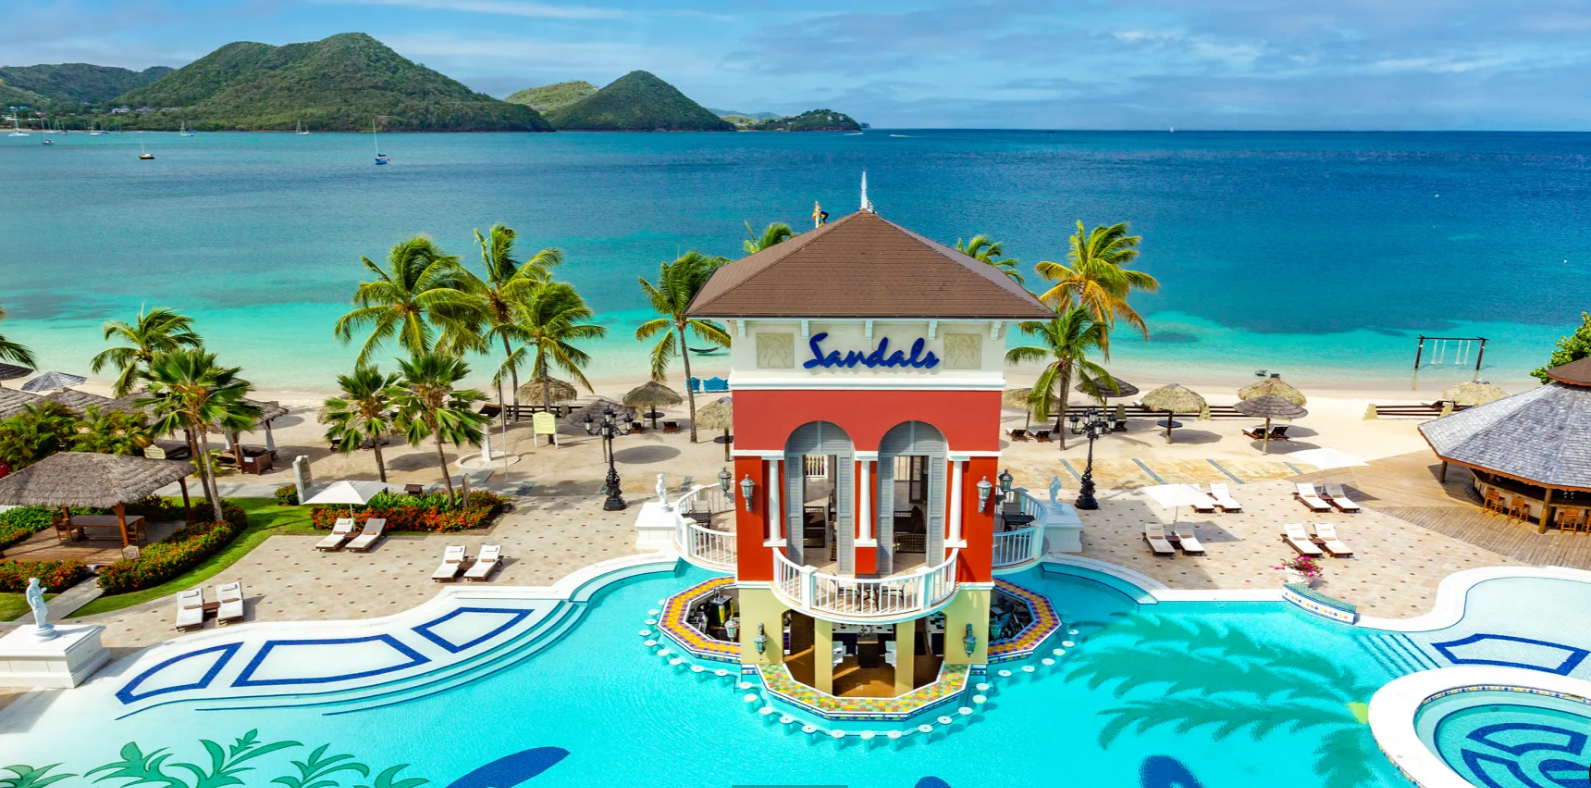 Sandals St Lucian Resort photo.PNG